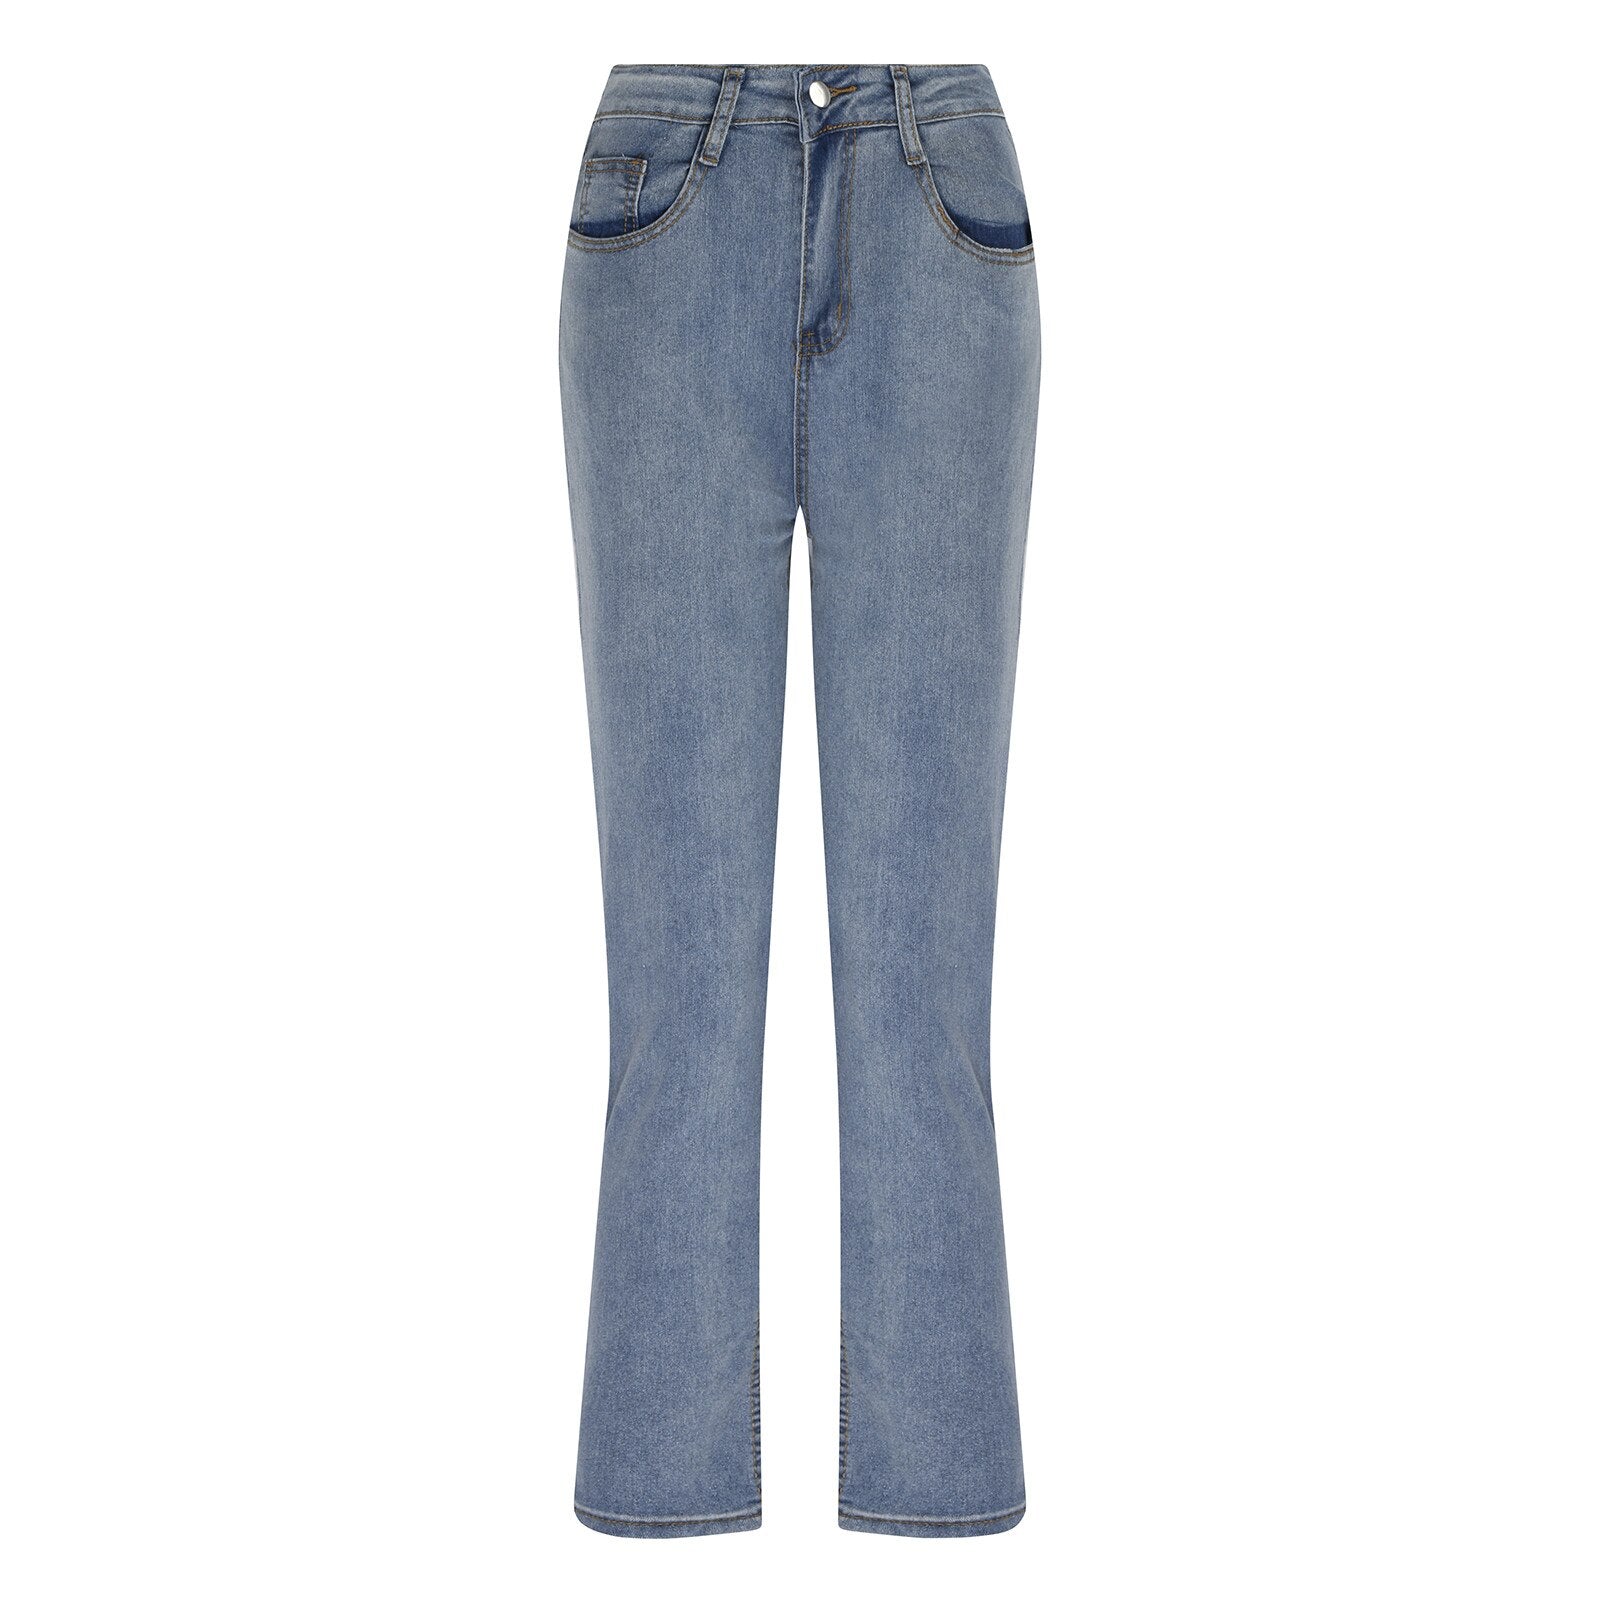 Casual Skinny Pencil Pants Jeans - Fashion Damsel